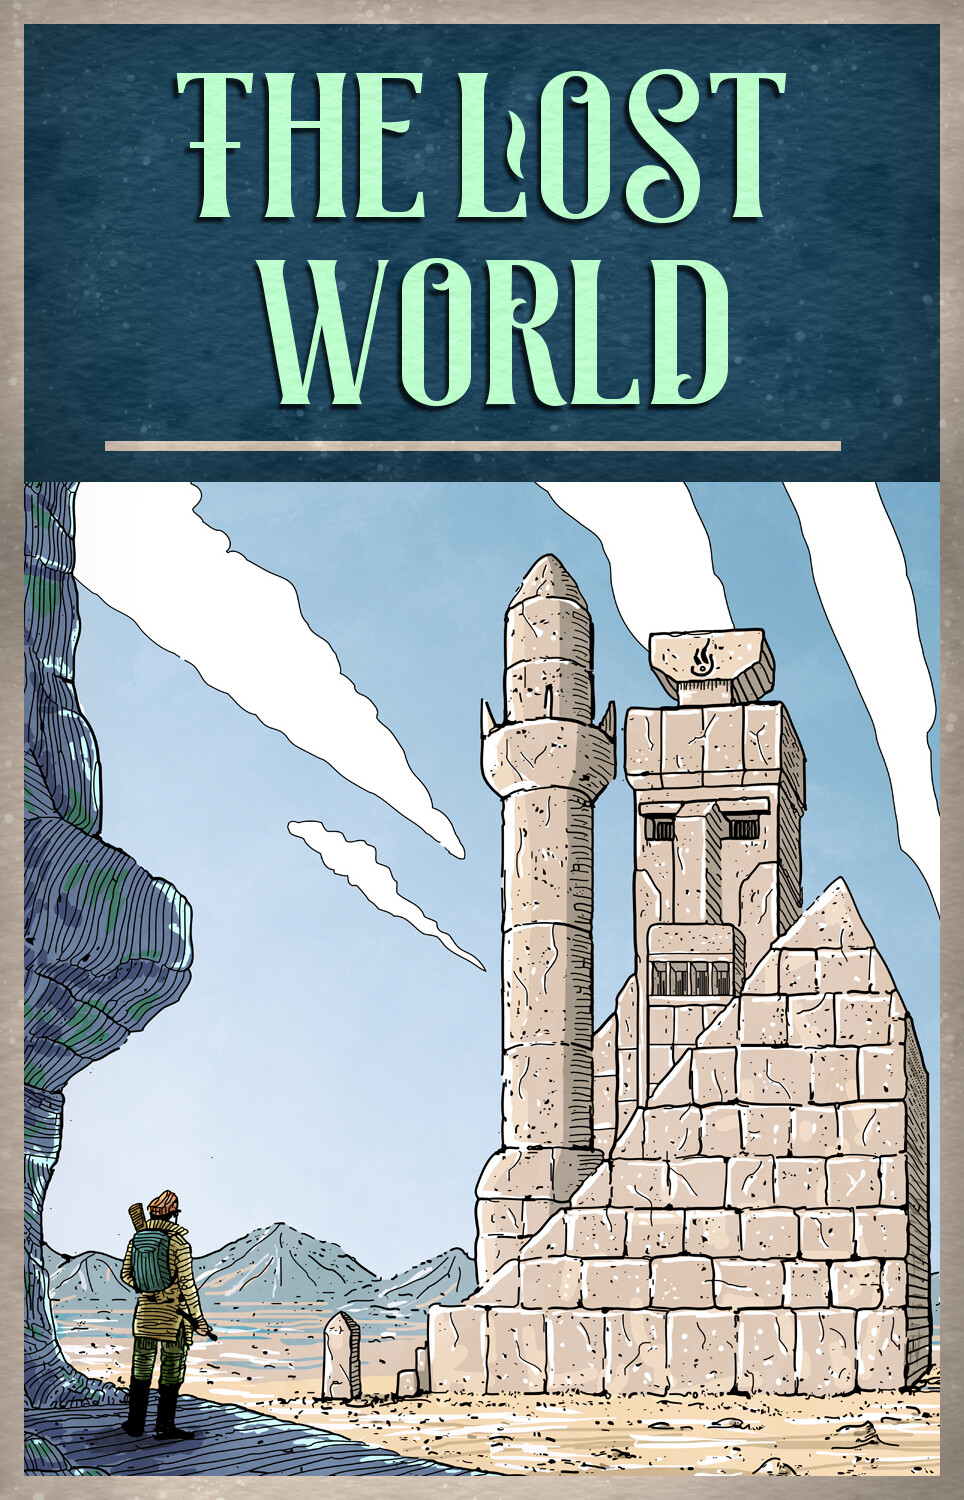 The lost world illustration sci-fi book cover illustration